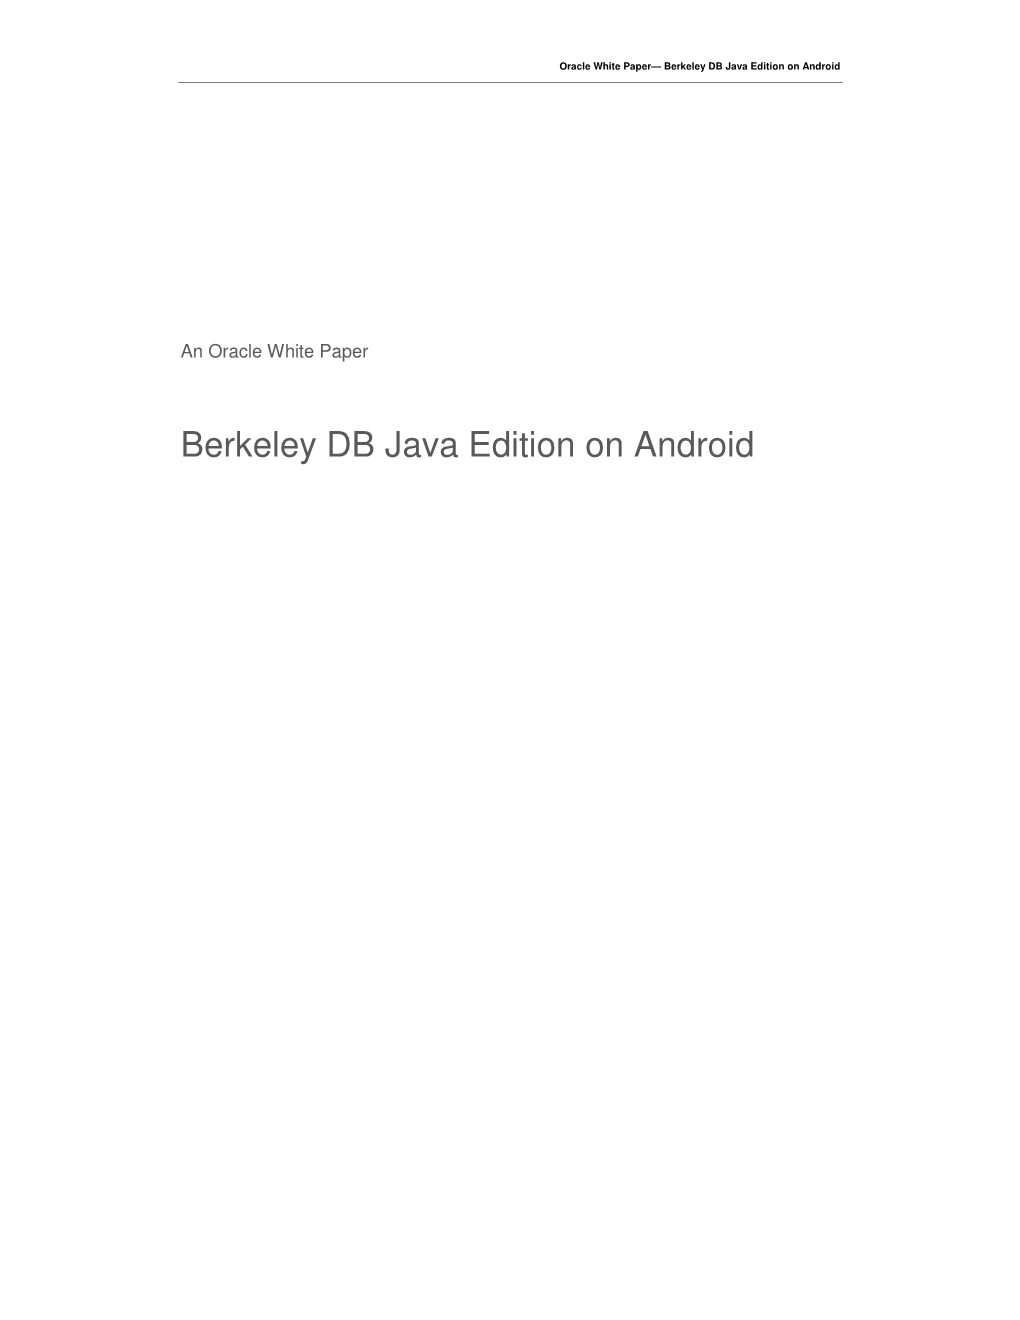 Berkeley DB Java Edition on Android